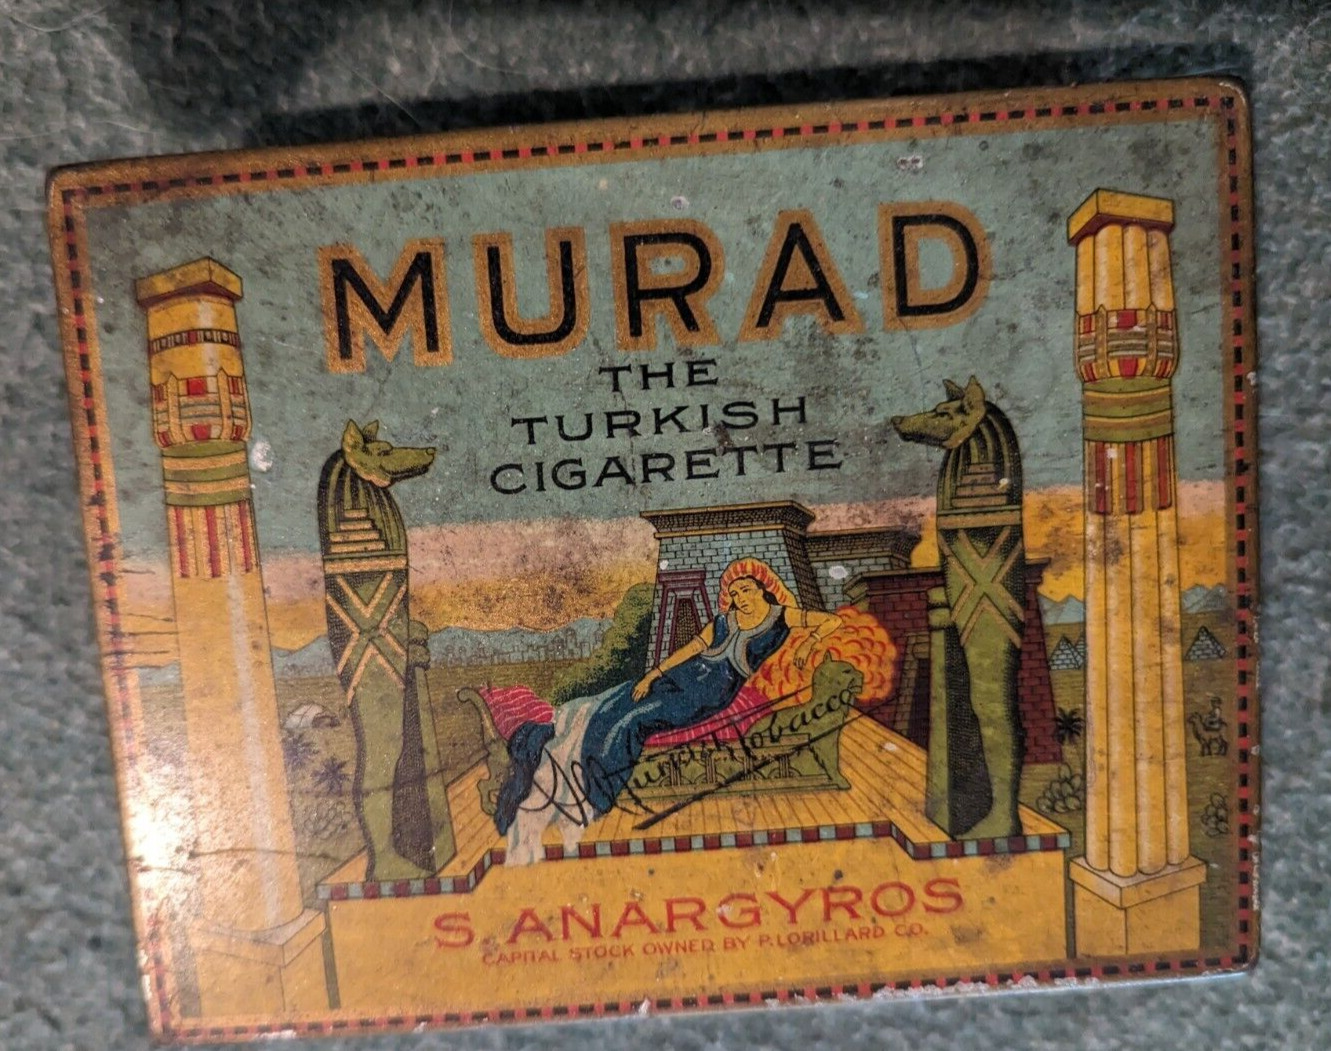 Vintage Murad The Turkish Cigarette Tin by Anargyros Lorillard Co.